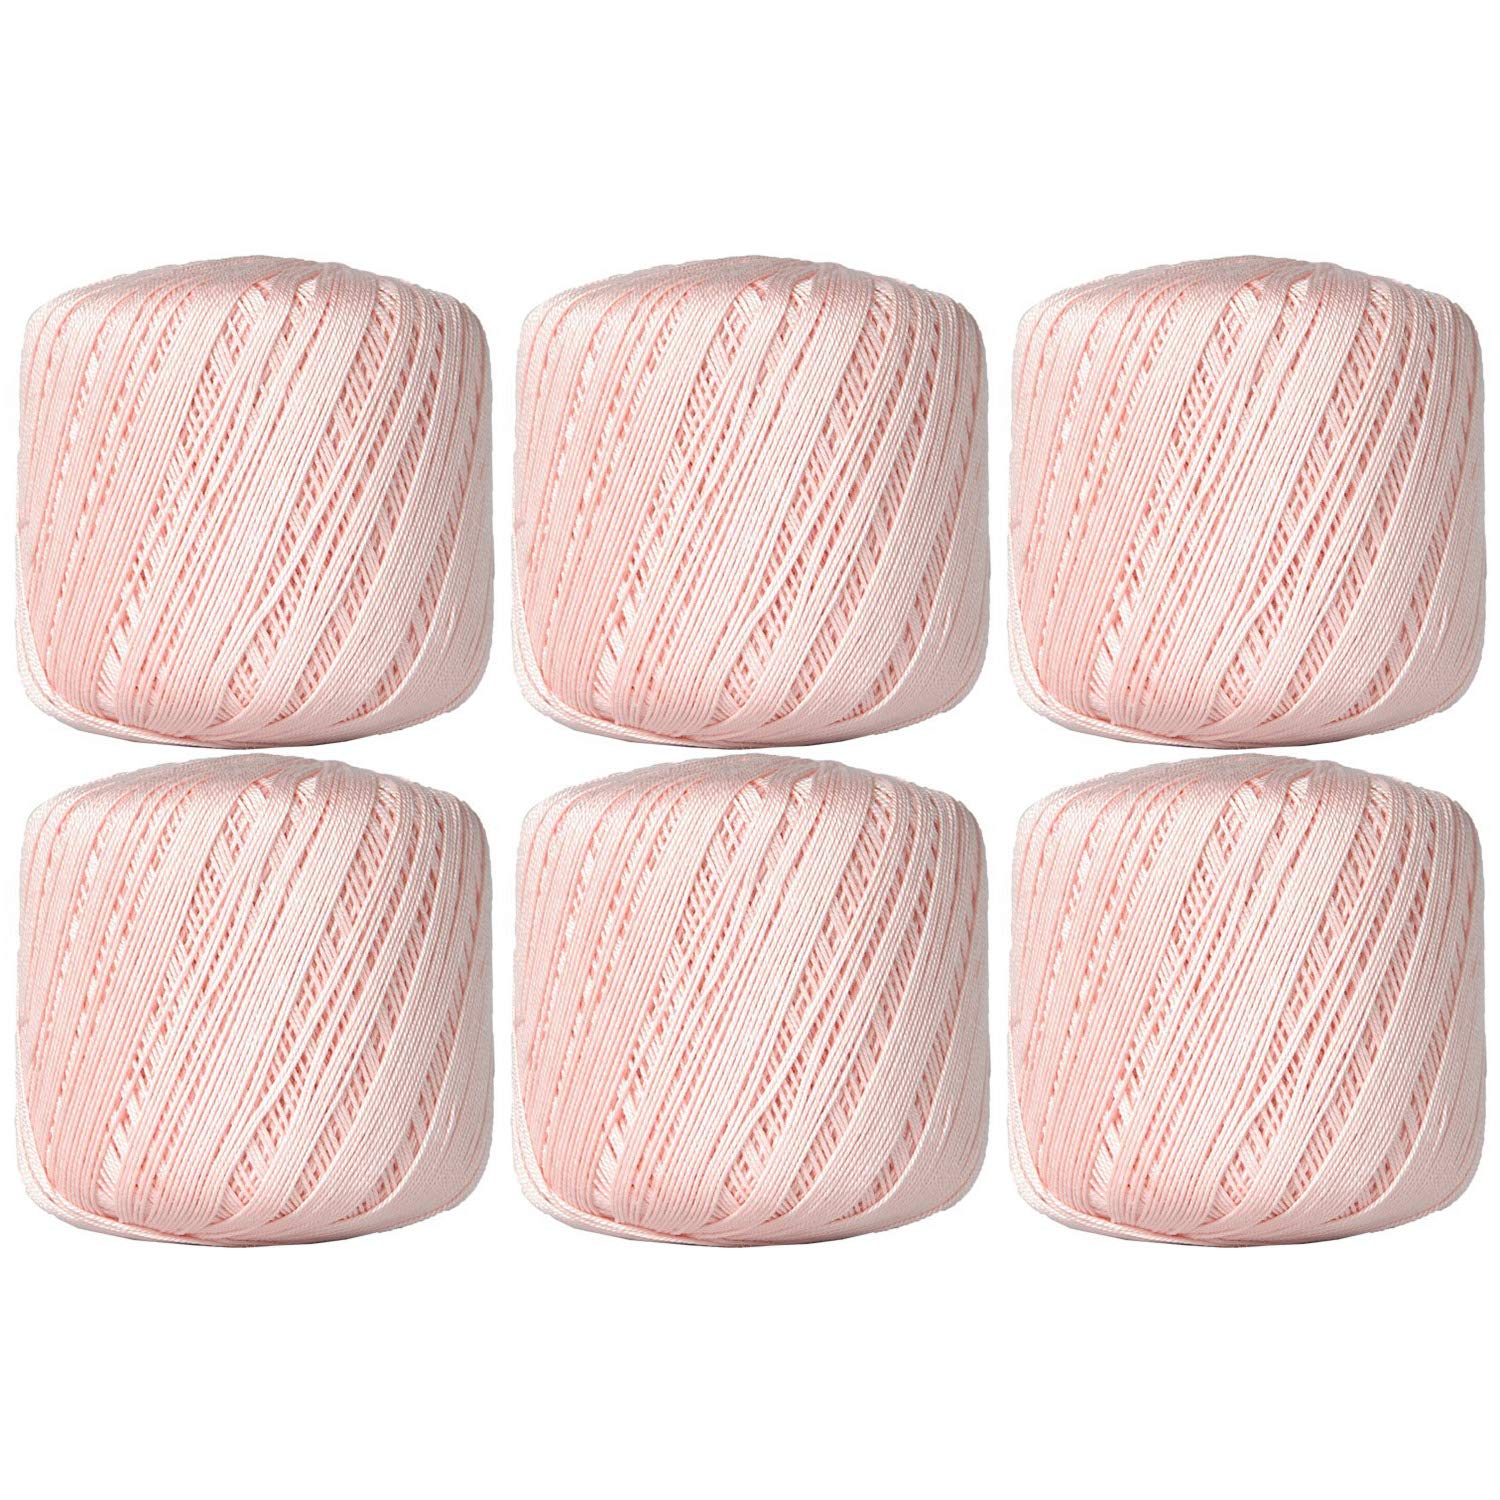 Threadart 6 Ball Pack Threadart 100 Pure Cotton Crochet Thread - Size 10 - Color 4 - Lt Pink - Size 10 And 3 - Singles And Bulk Packs Avai